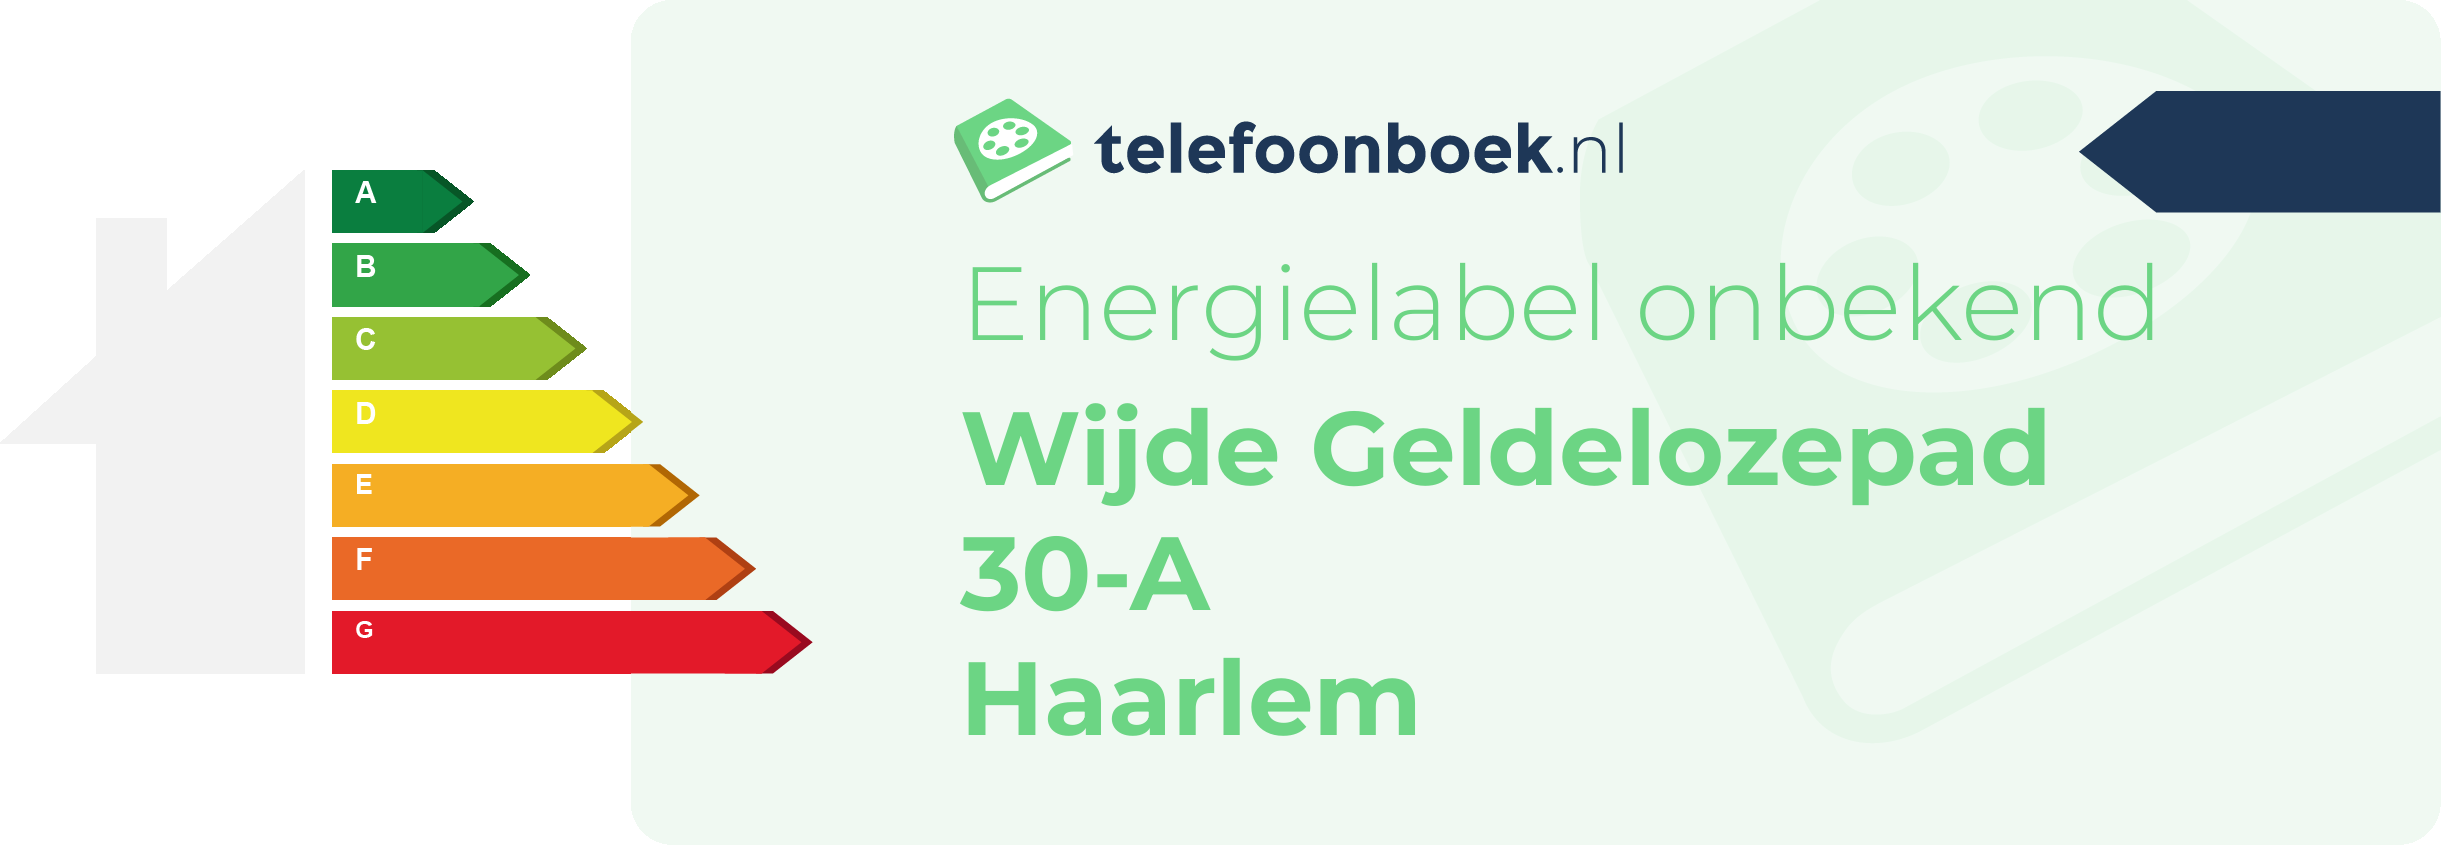 Energielabel Wijde Geldelozepad 30-A Haarlem